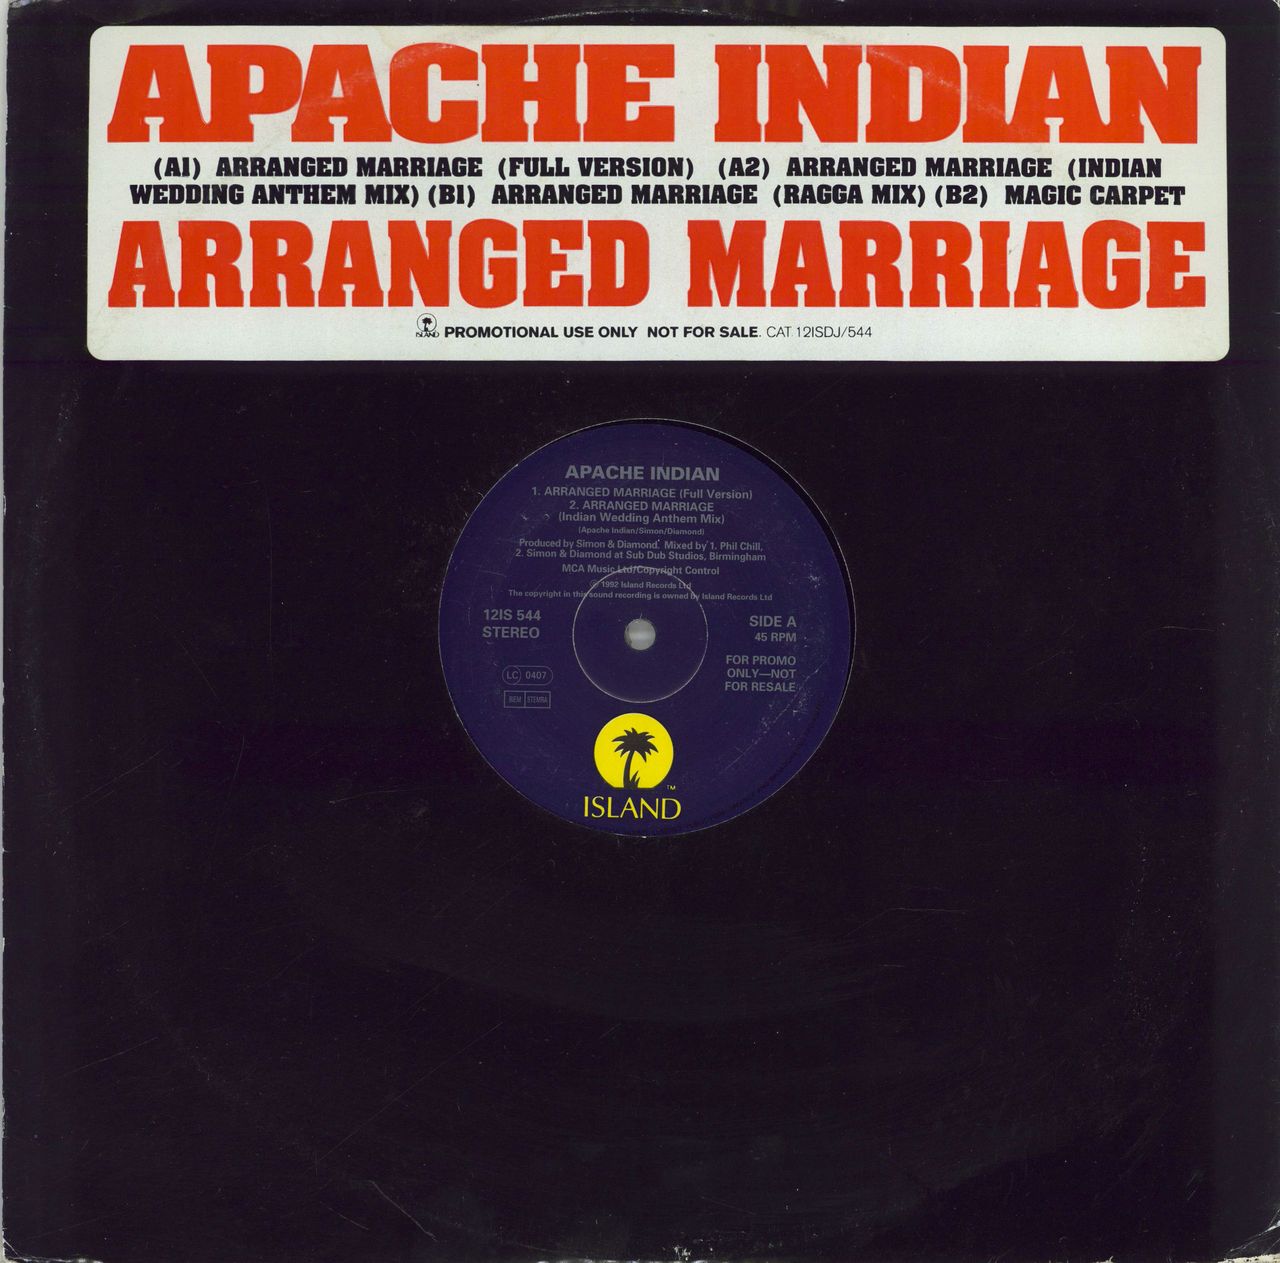 Apache Indian Arranged Marriage UK Promo 12" vinyl single (12 inch record / Maxi-single) 12IS544